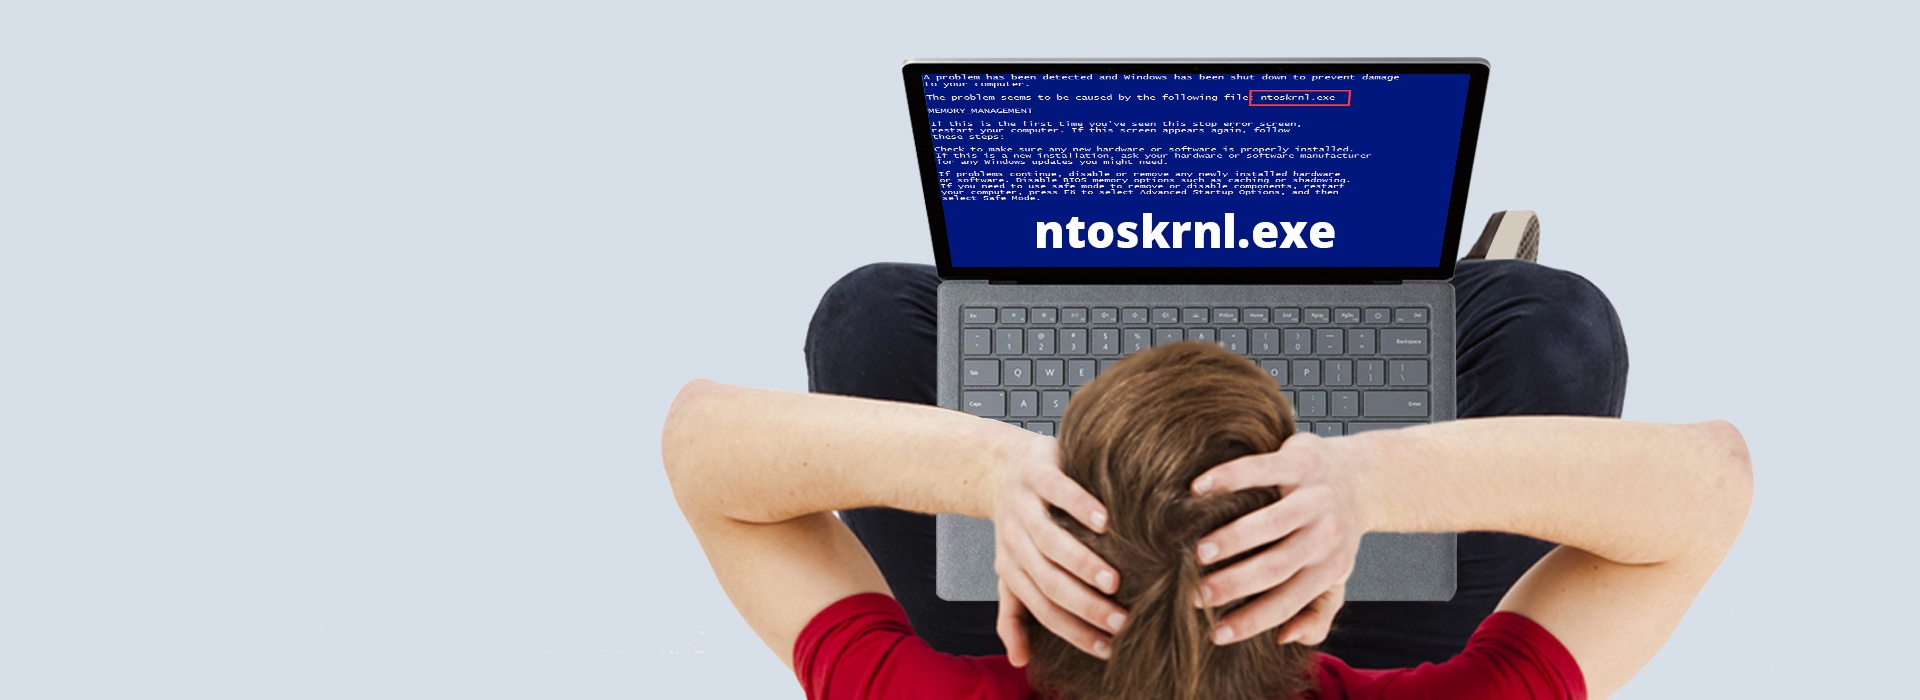 ntoskrnl.exe crash windows 10